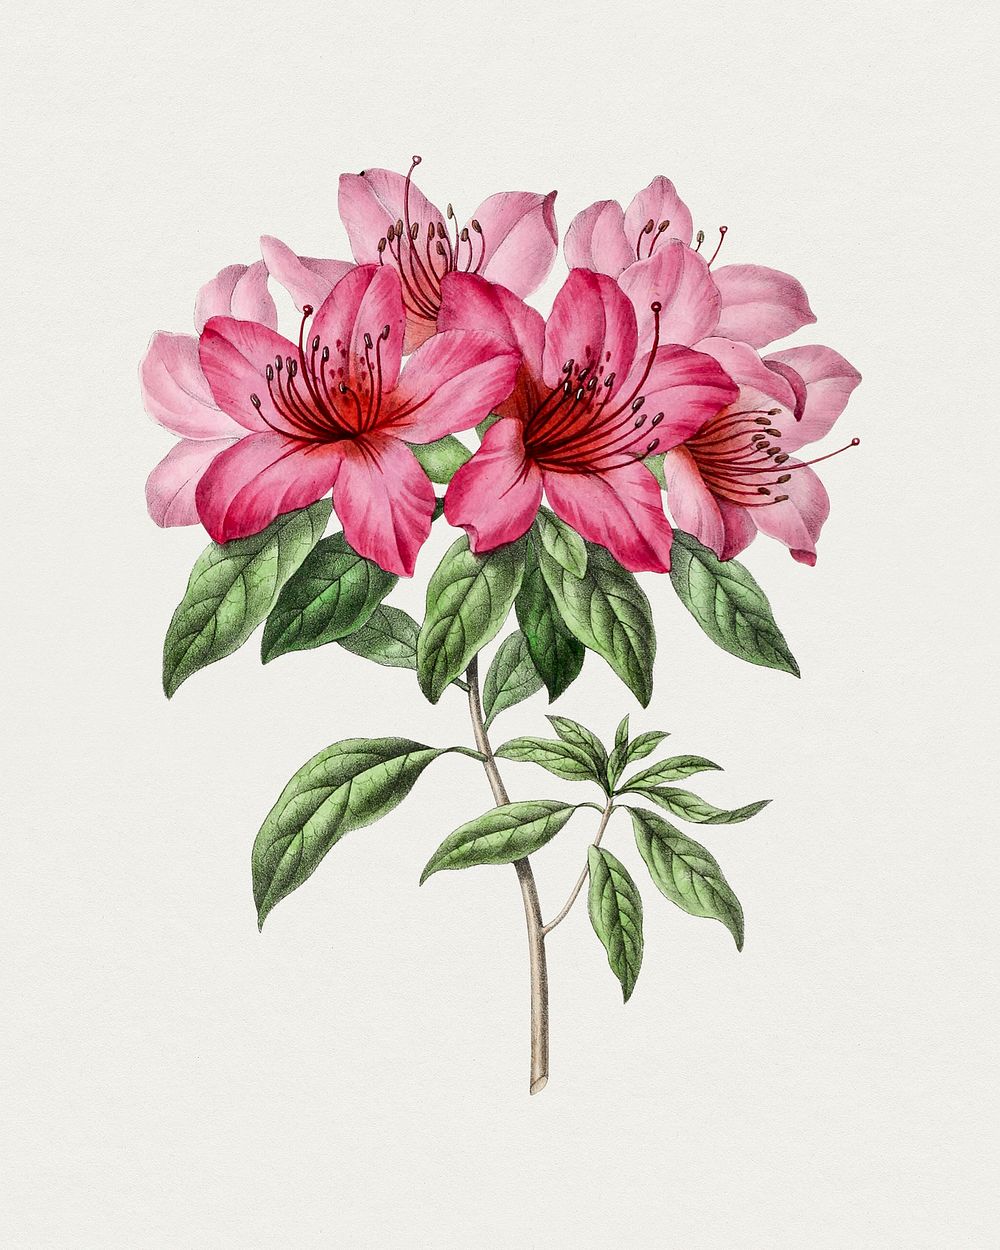 Hand drawn pink azalea flower. Original from Biodiversity Heritage Library. Digitally enhanced by rawpixel.